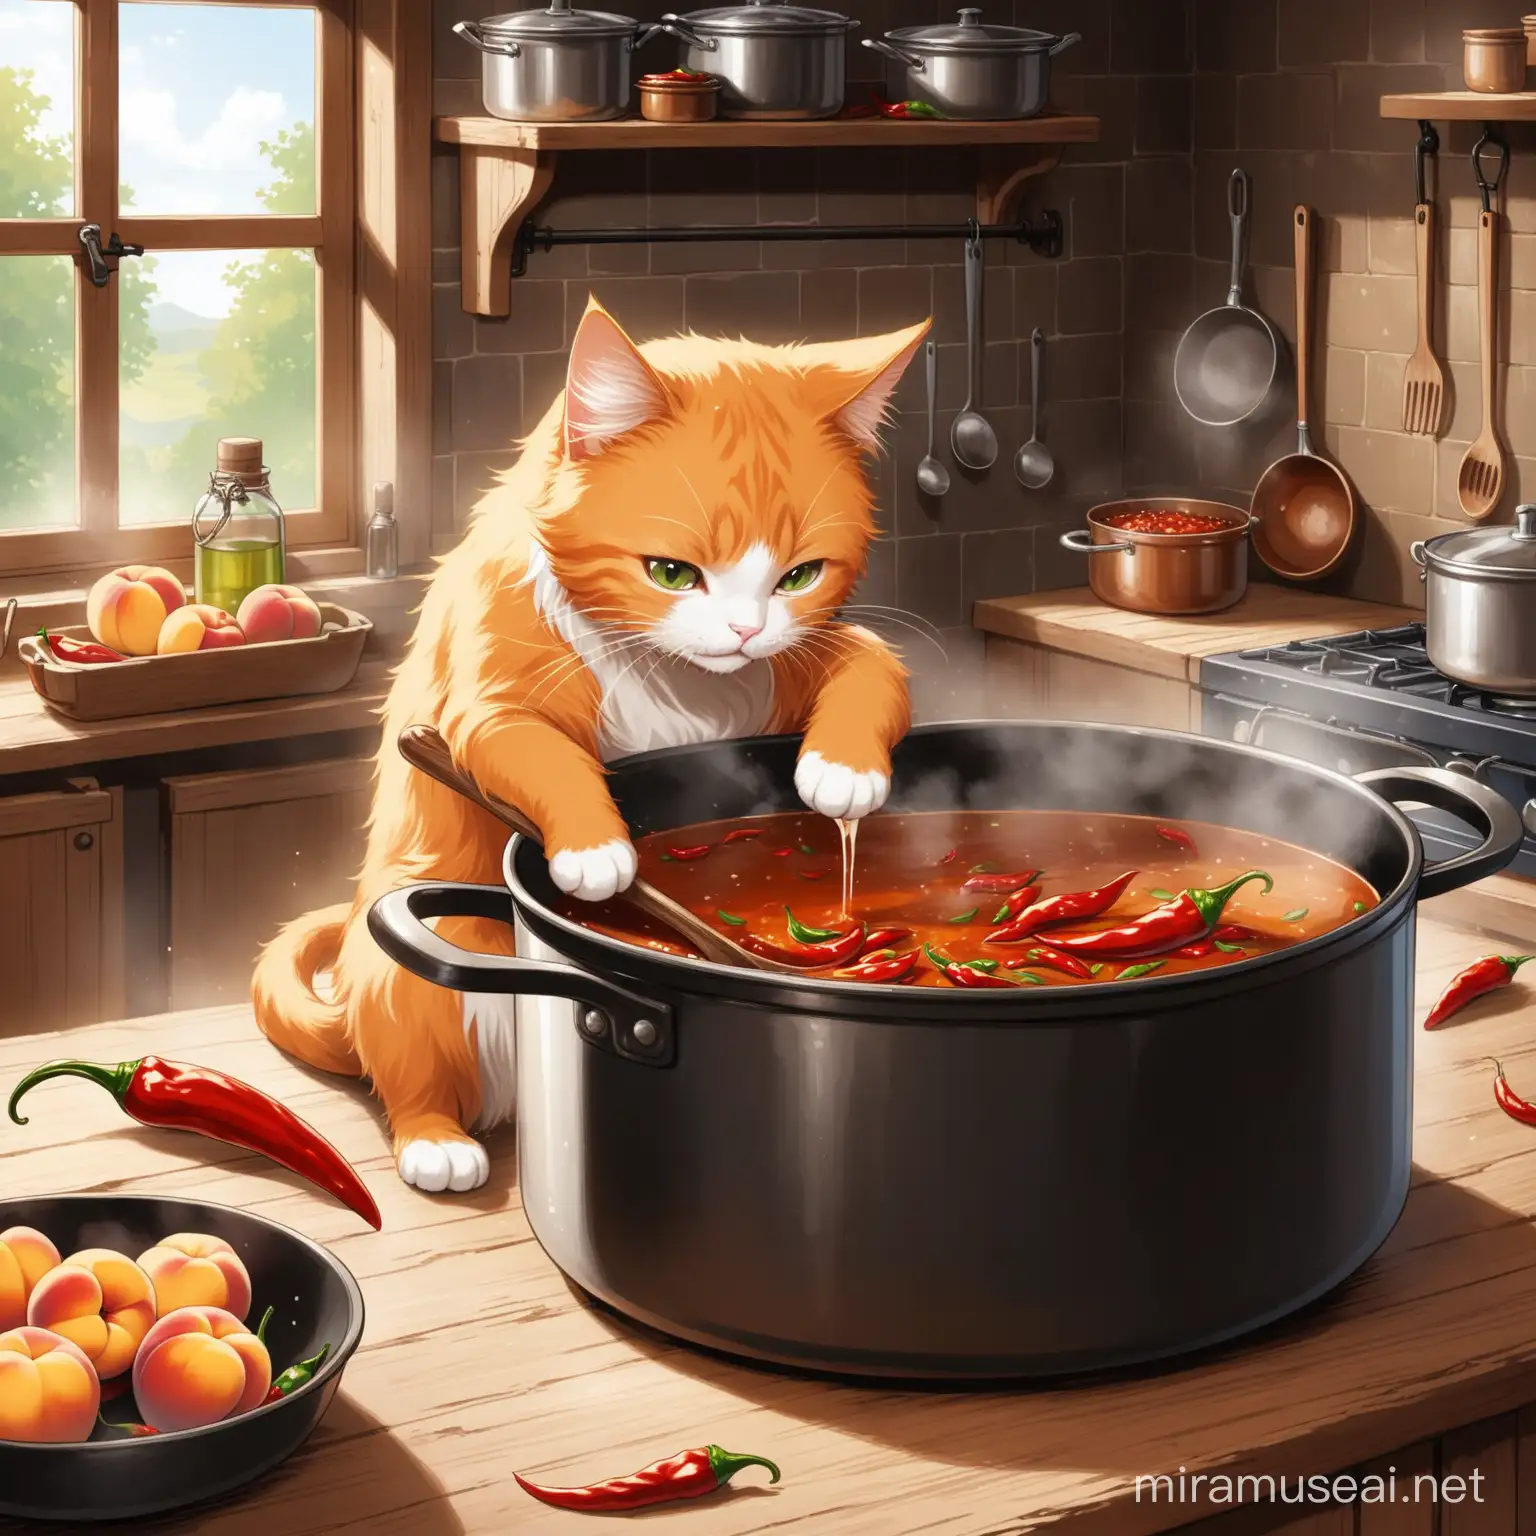 Orange Cat Cooking Spicy Peach Chilli in Rustic Kitchen